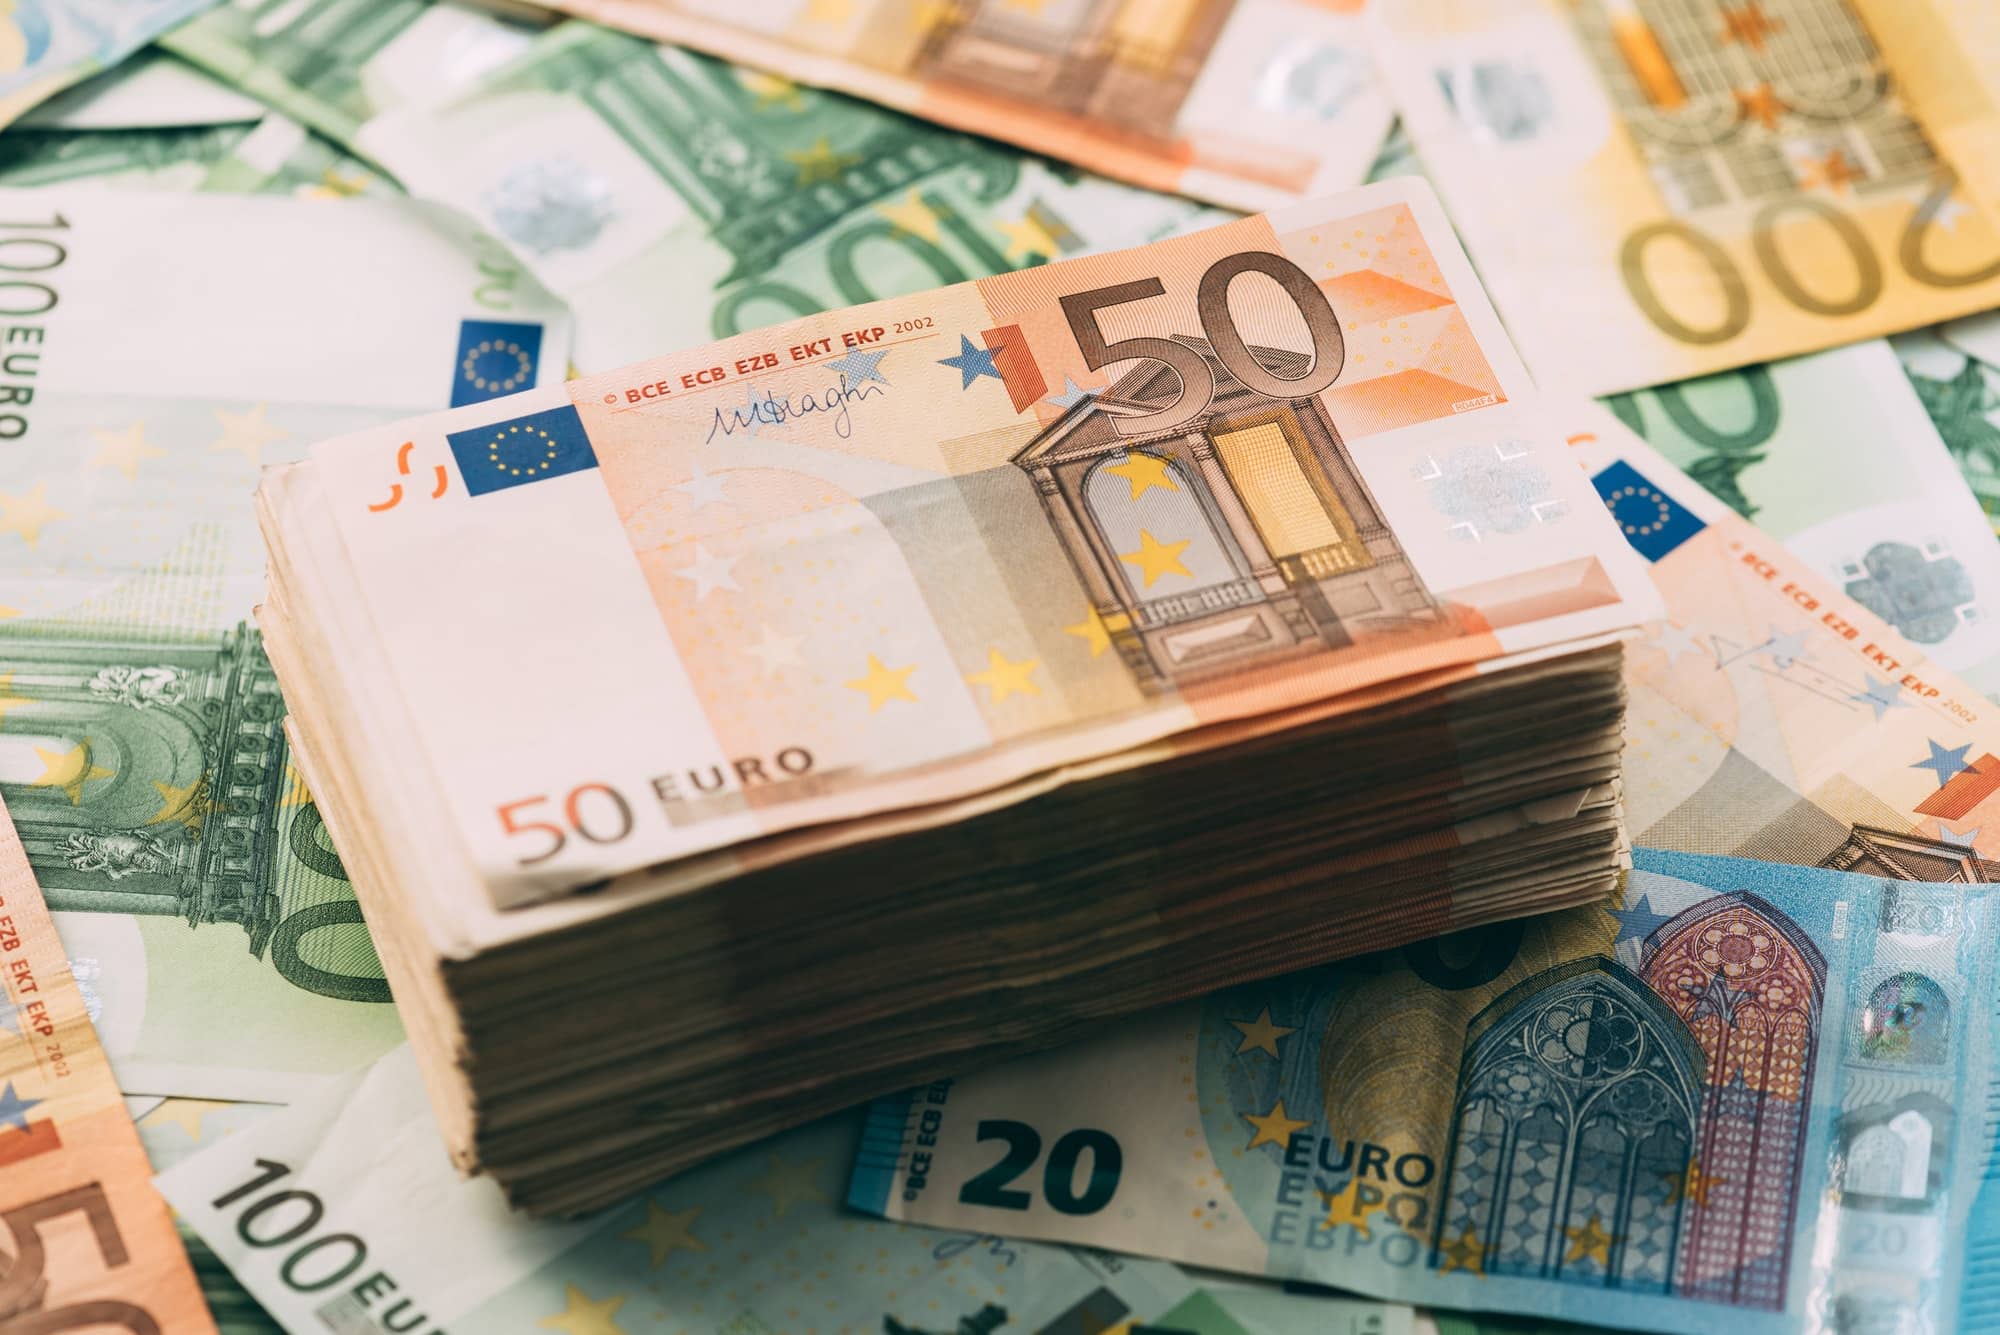 Euro cash stack closeup